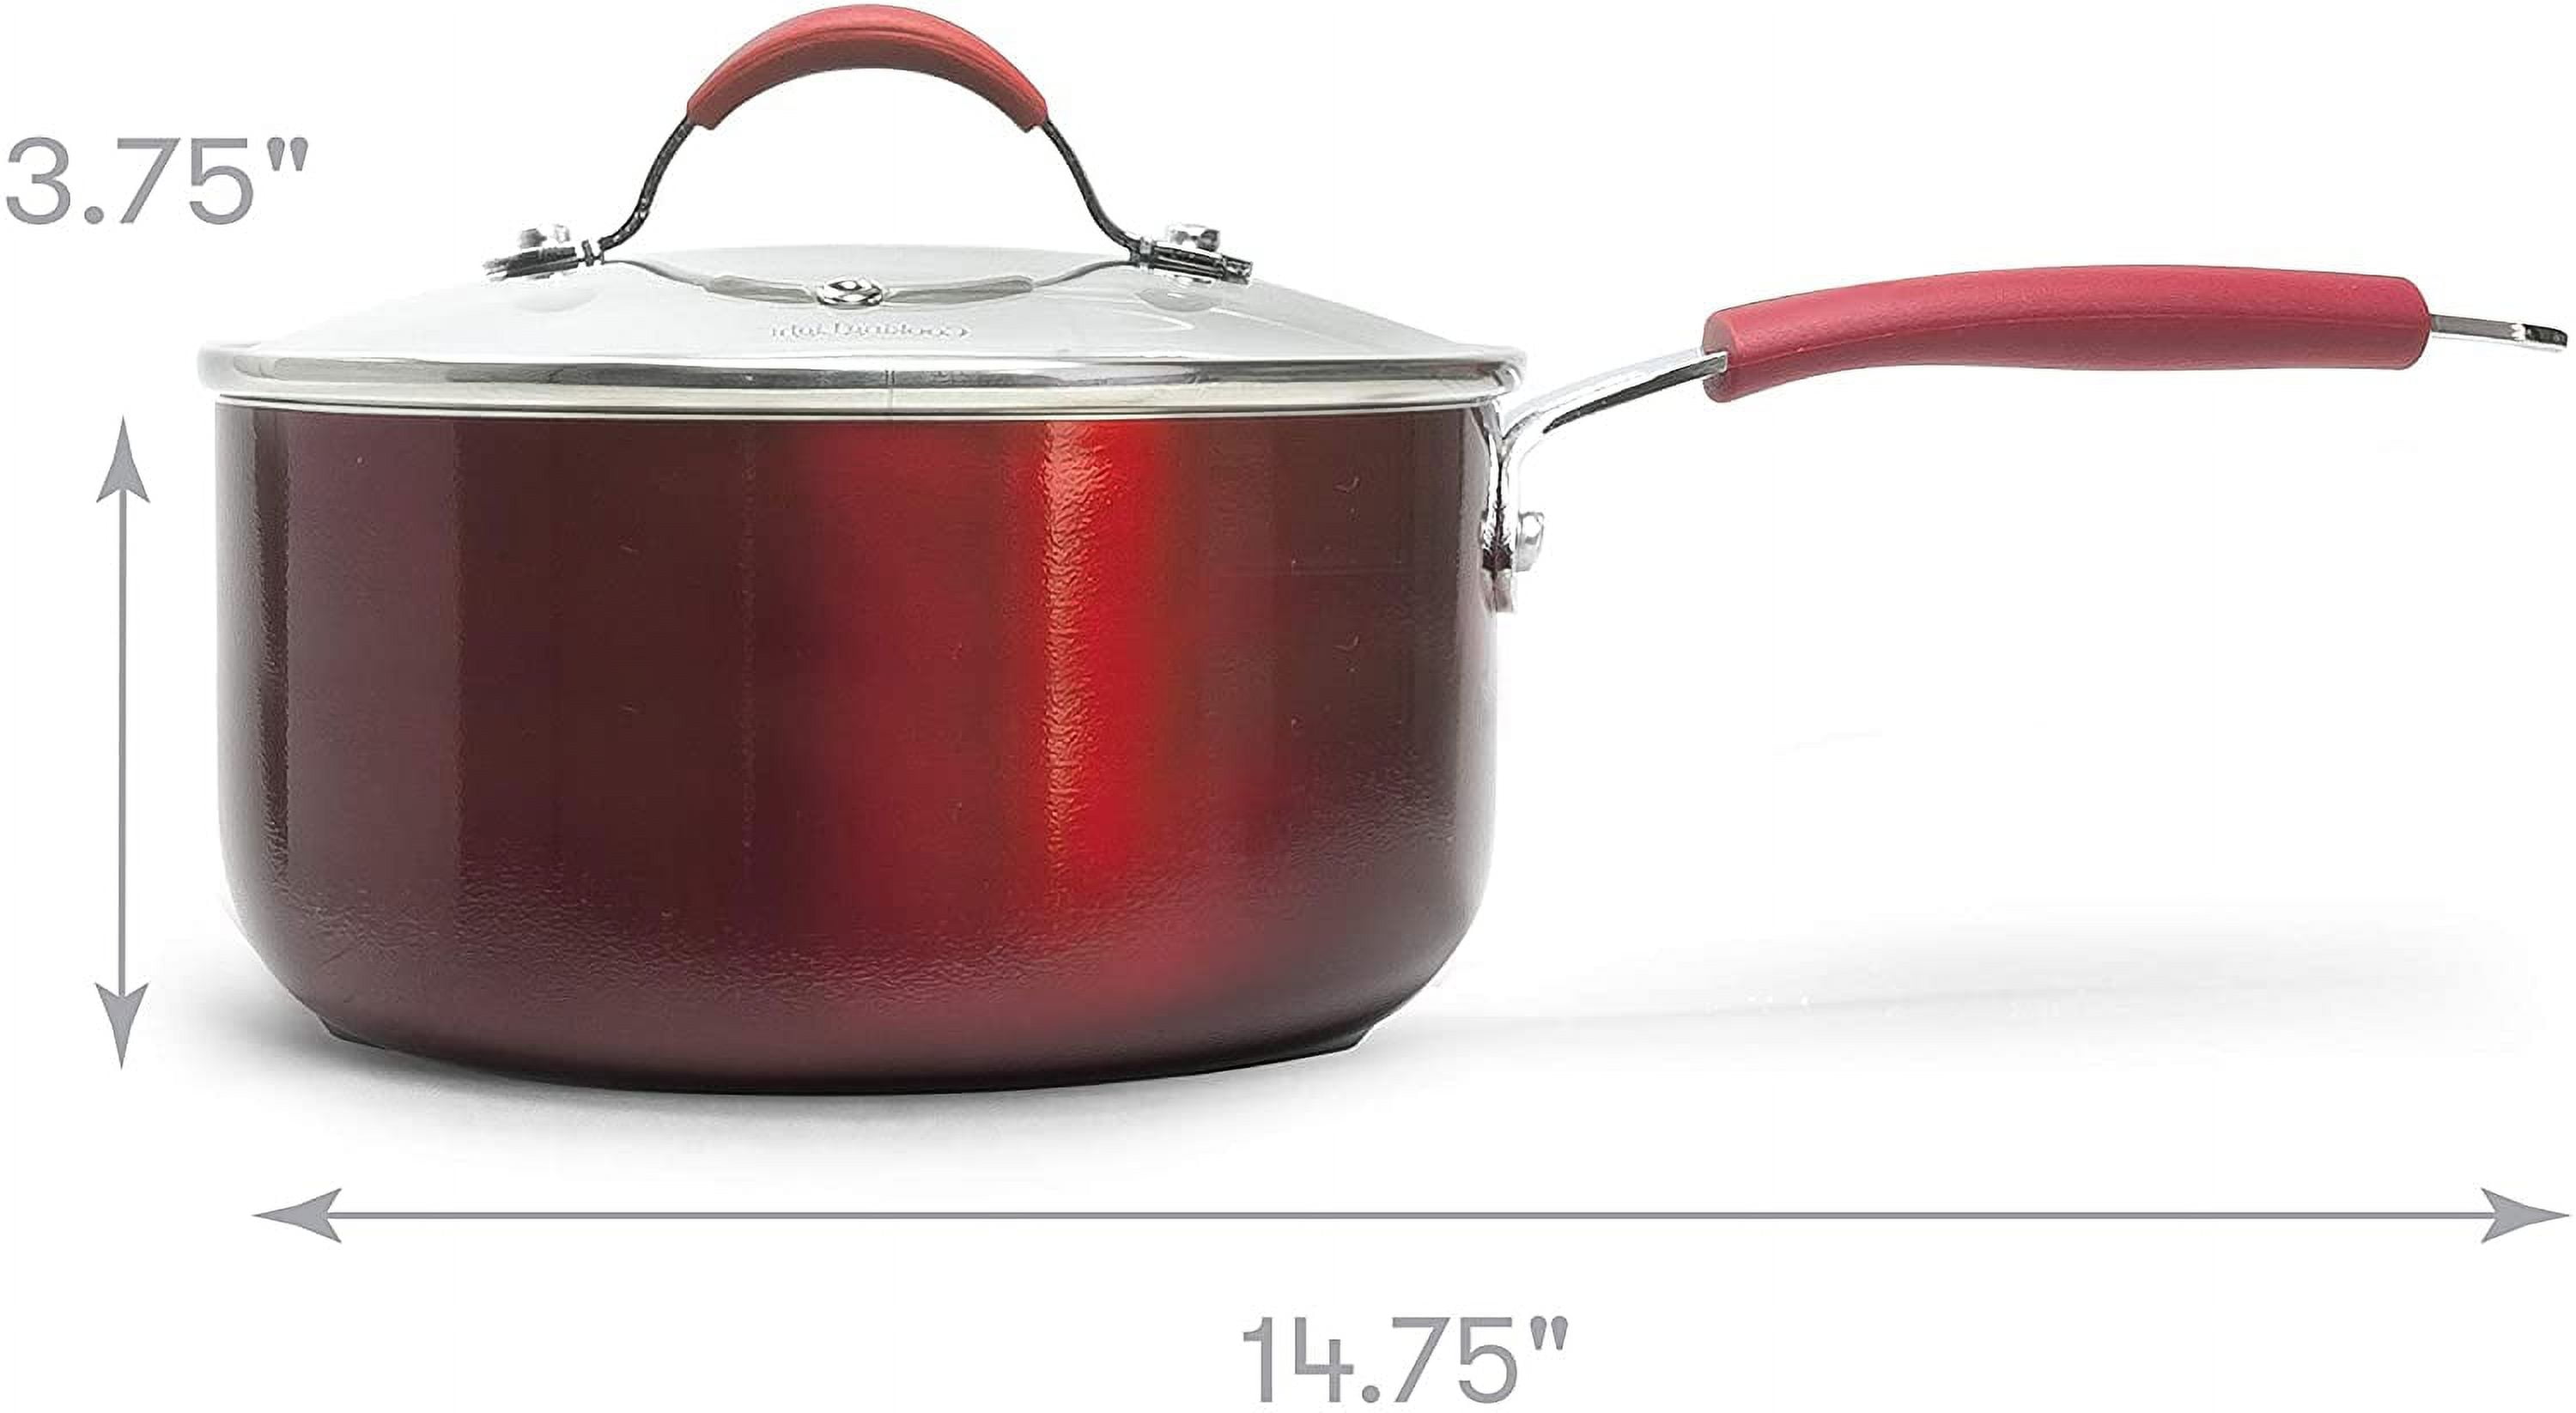 Cooking Light Allure 3 Quart Non-Stick Ceramic Saucepan with Lid, Red 